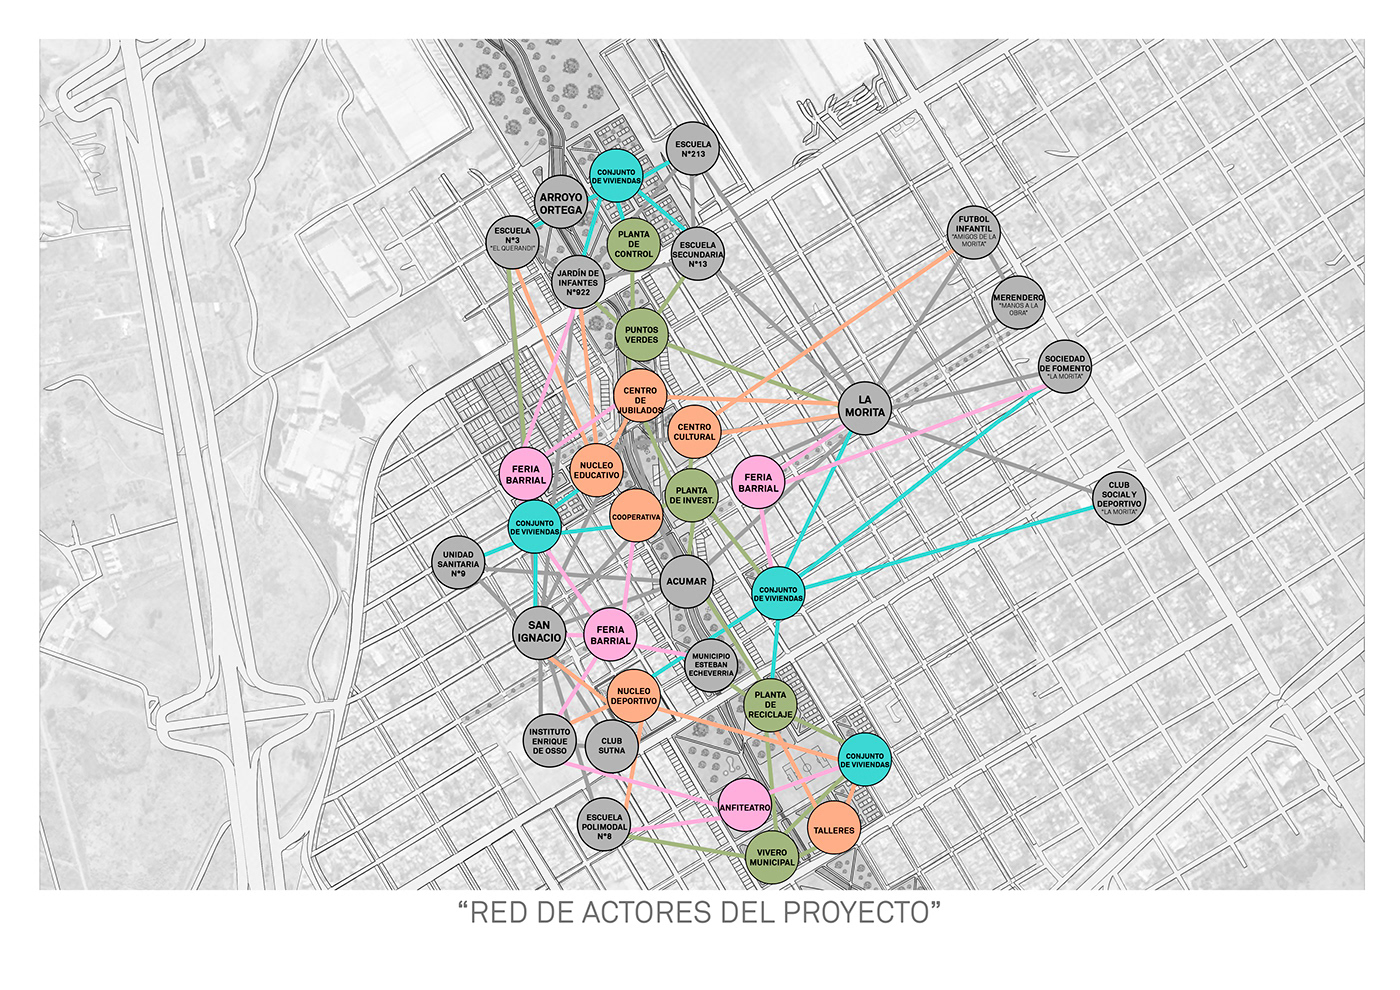 architecture arquitectura city fadu fadu uba Landscape planning ProyectoUrbano Urban Design urbanismo